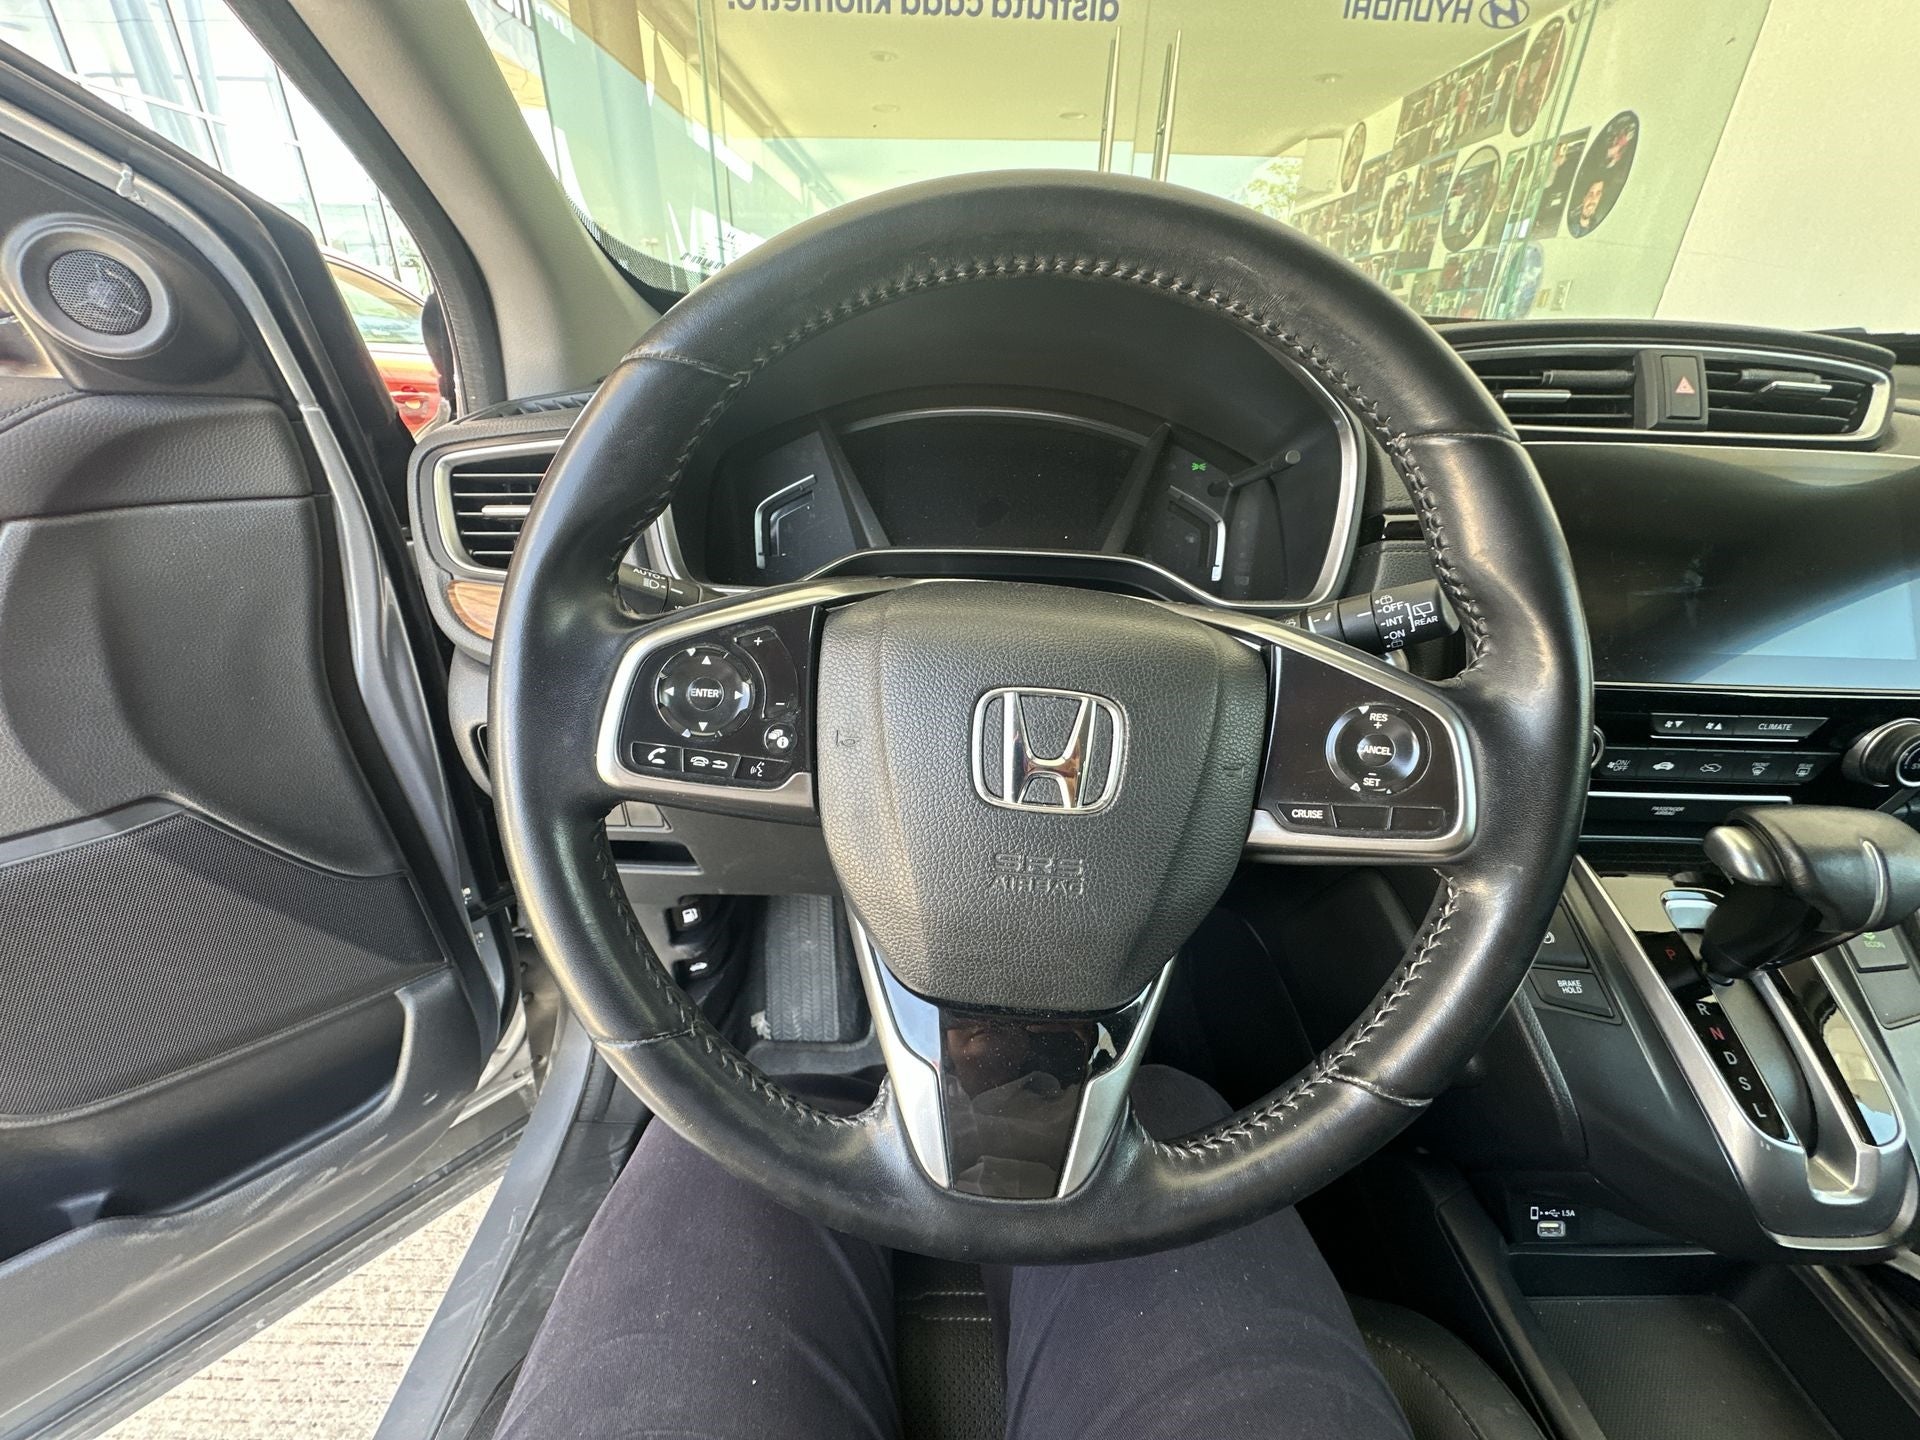 2020 Honda CR-V 1.5 Turbo Plus Piel Cvt